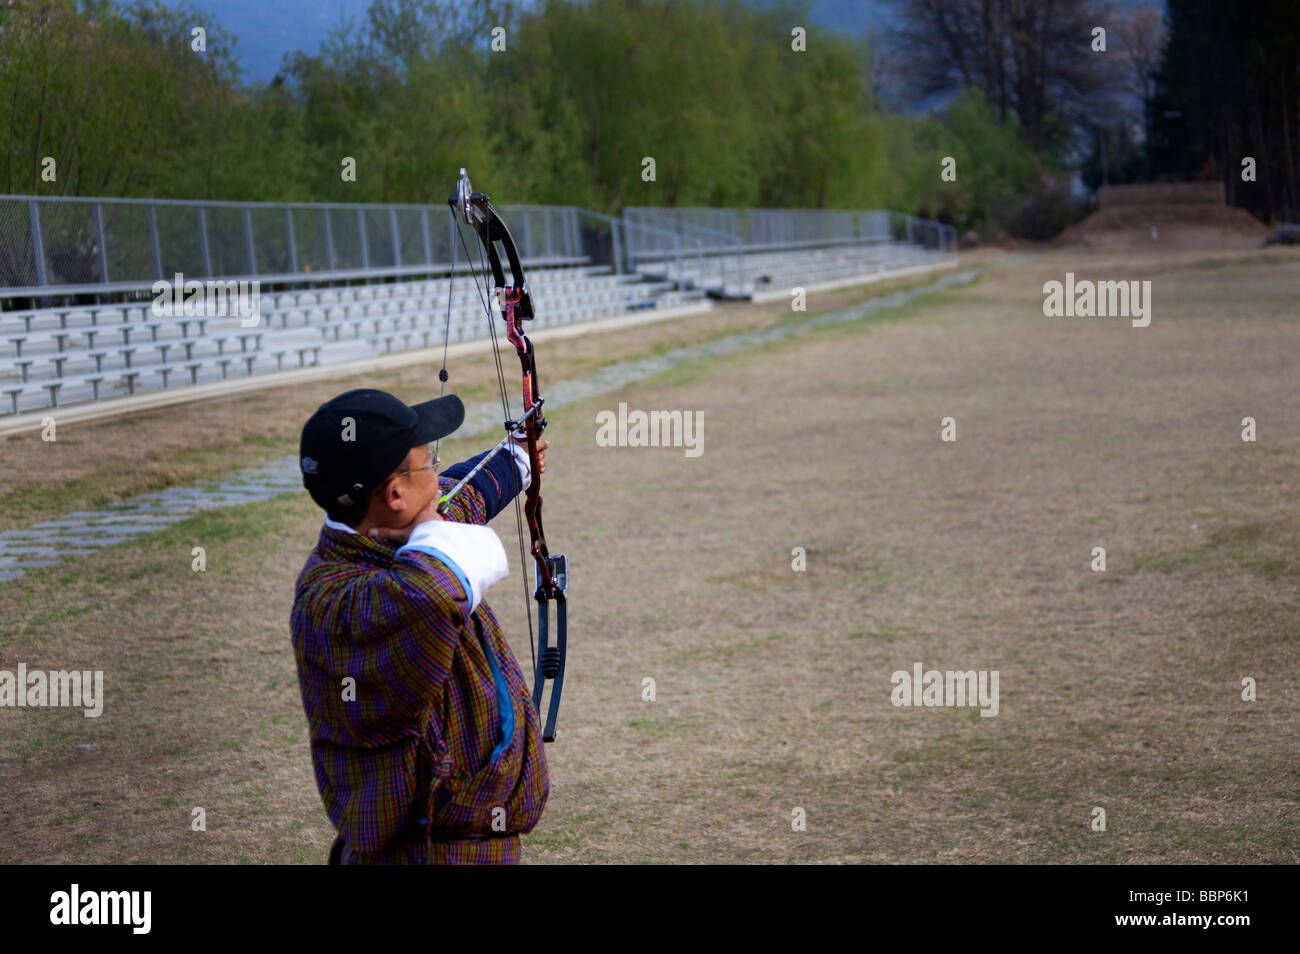 Archer Konkurrent im Kostüm Changlimithang National Sports Stadium, ein Mehrzweckstadion, Thimphu, Bhutan Horzontal Ansicht Stockfoto